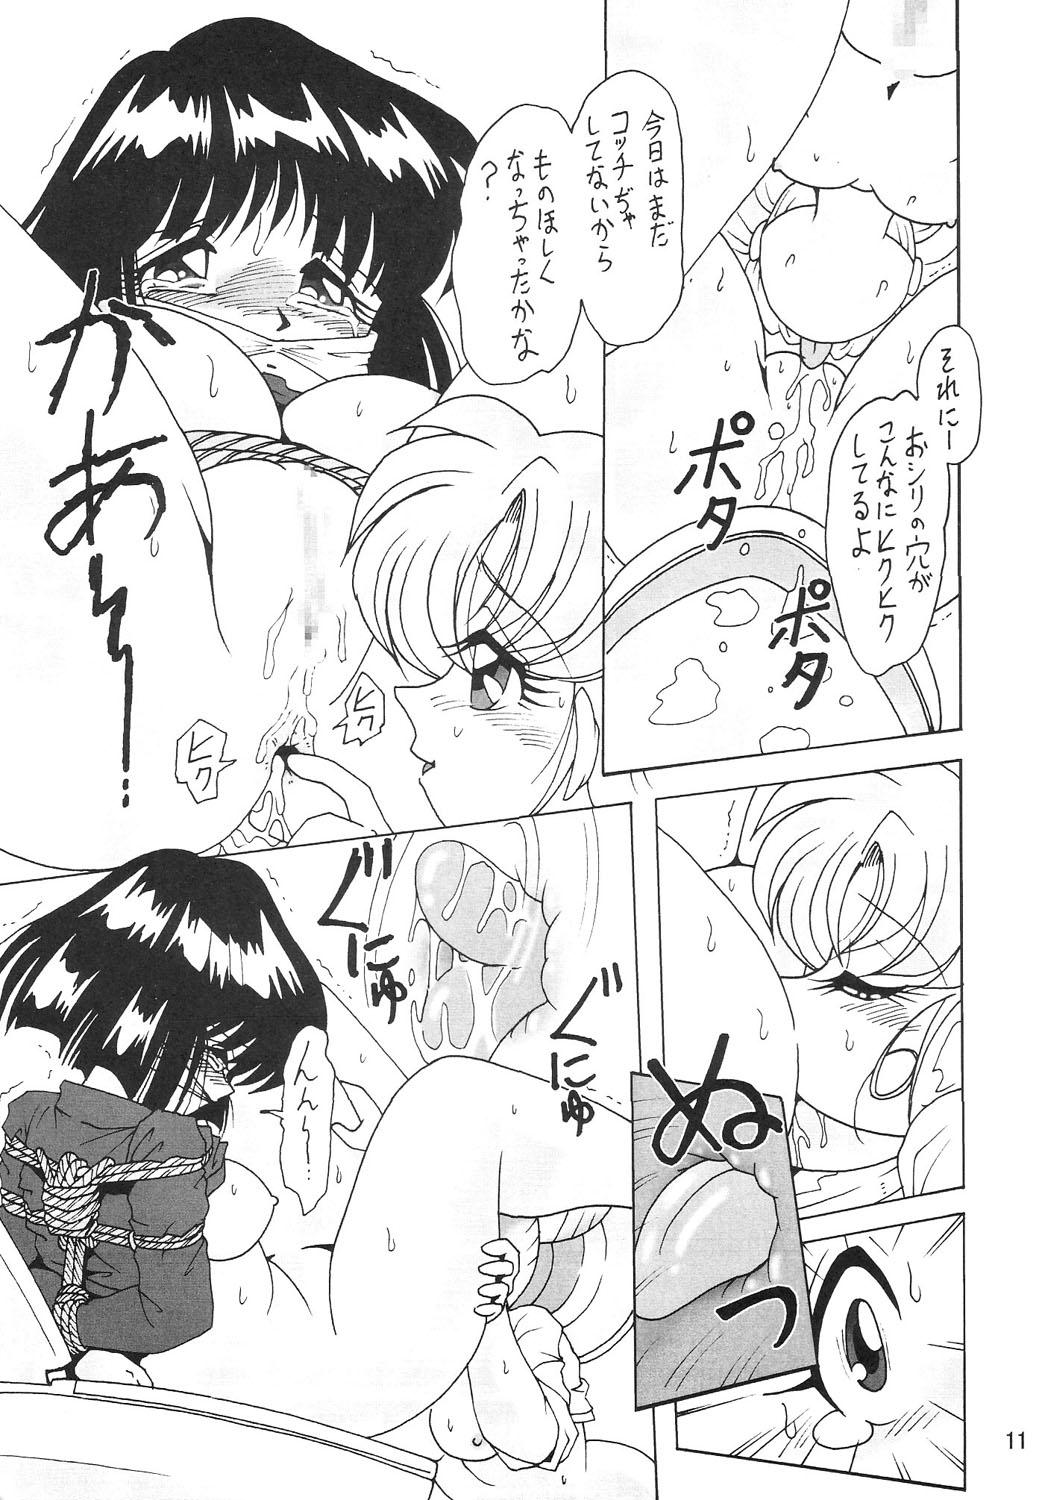 Siririca Silent Saturn SS vol. 6 - Sailor moon Boy Fuck Girl - Page 11